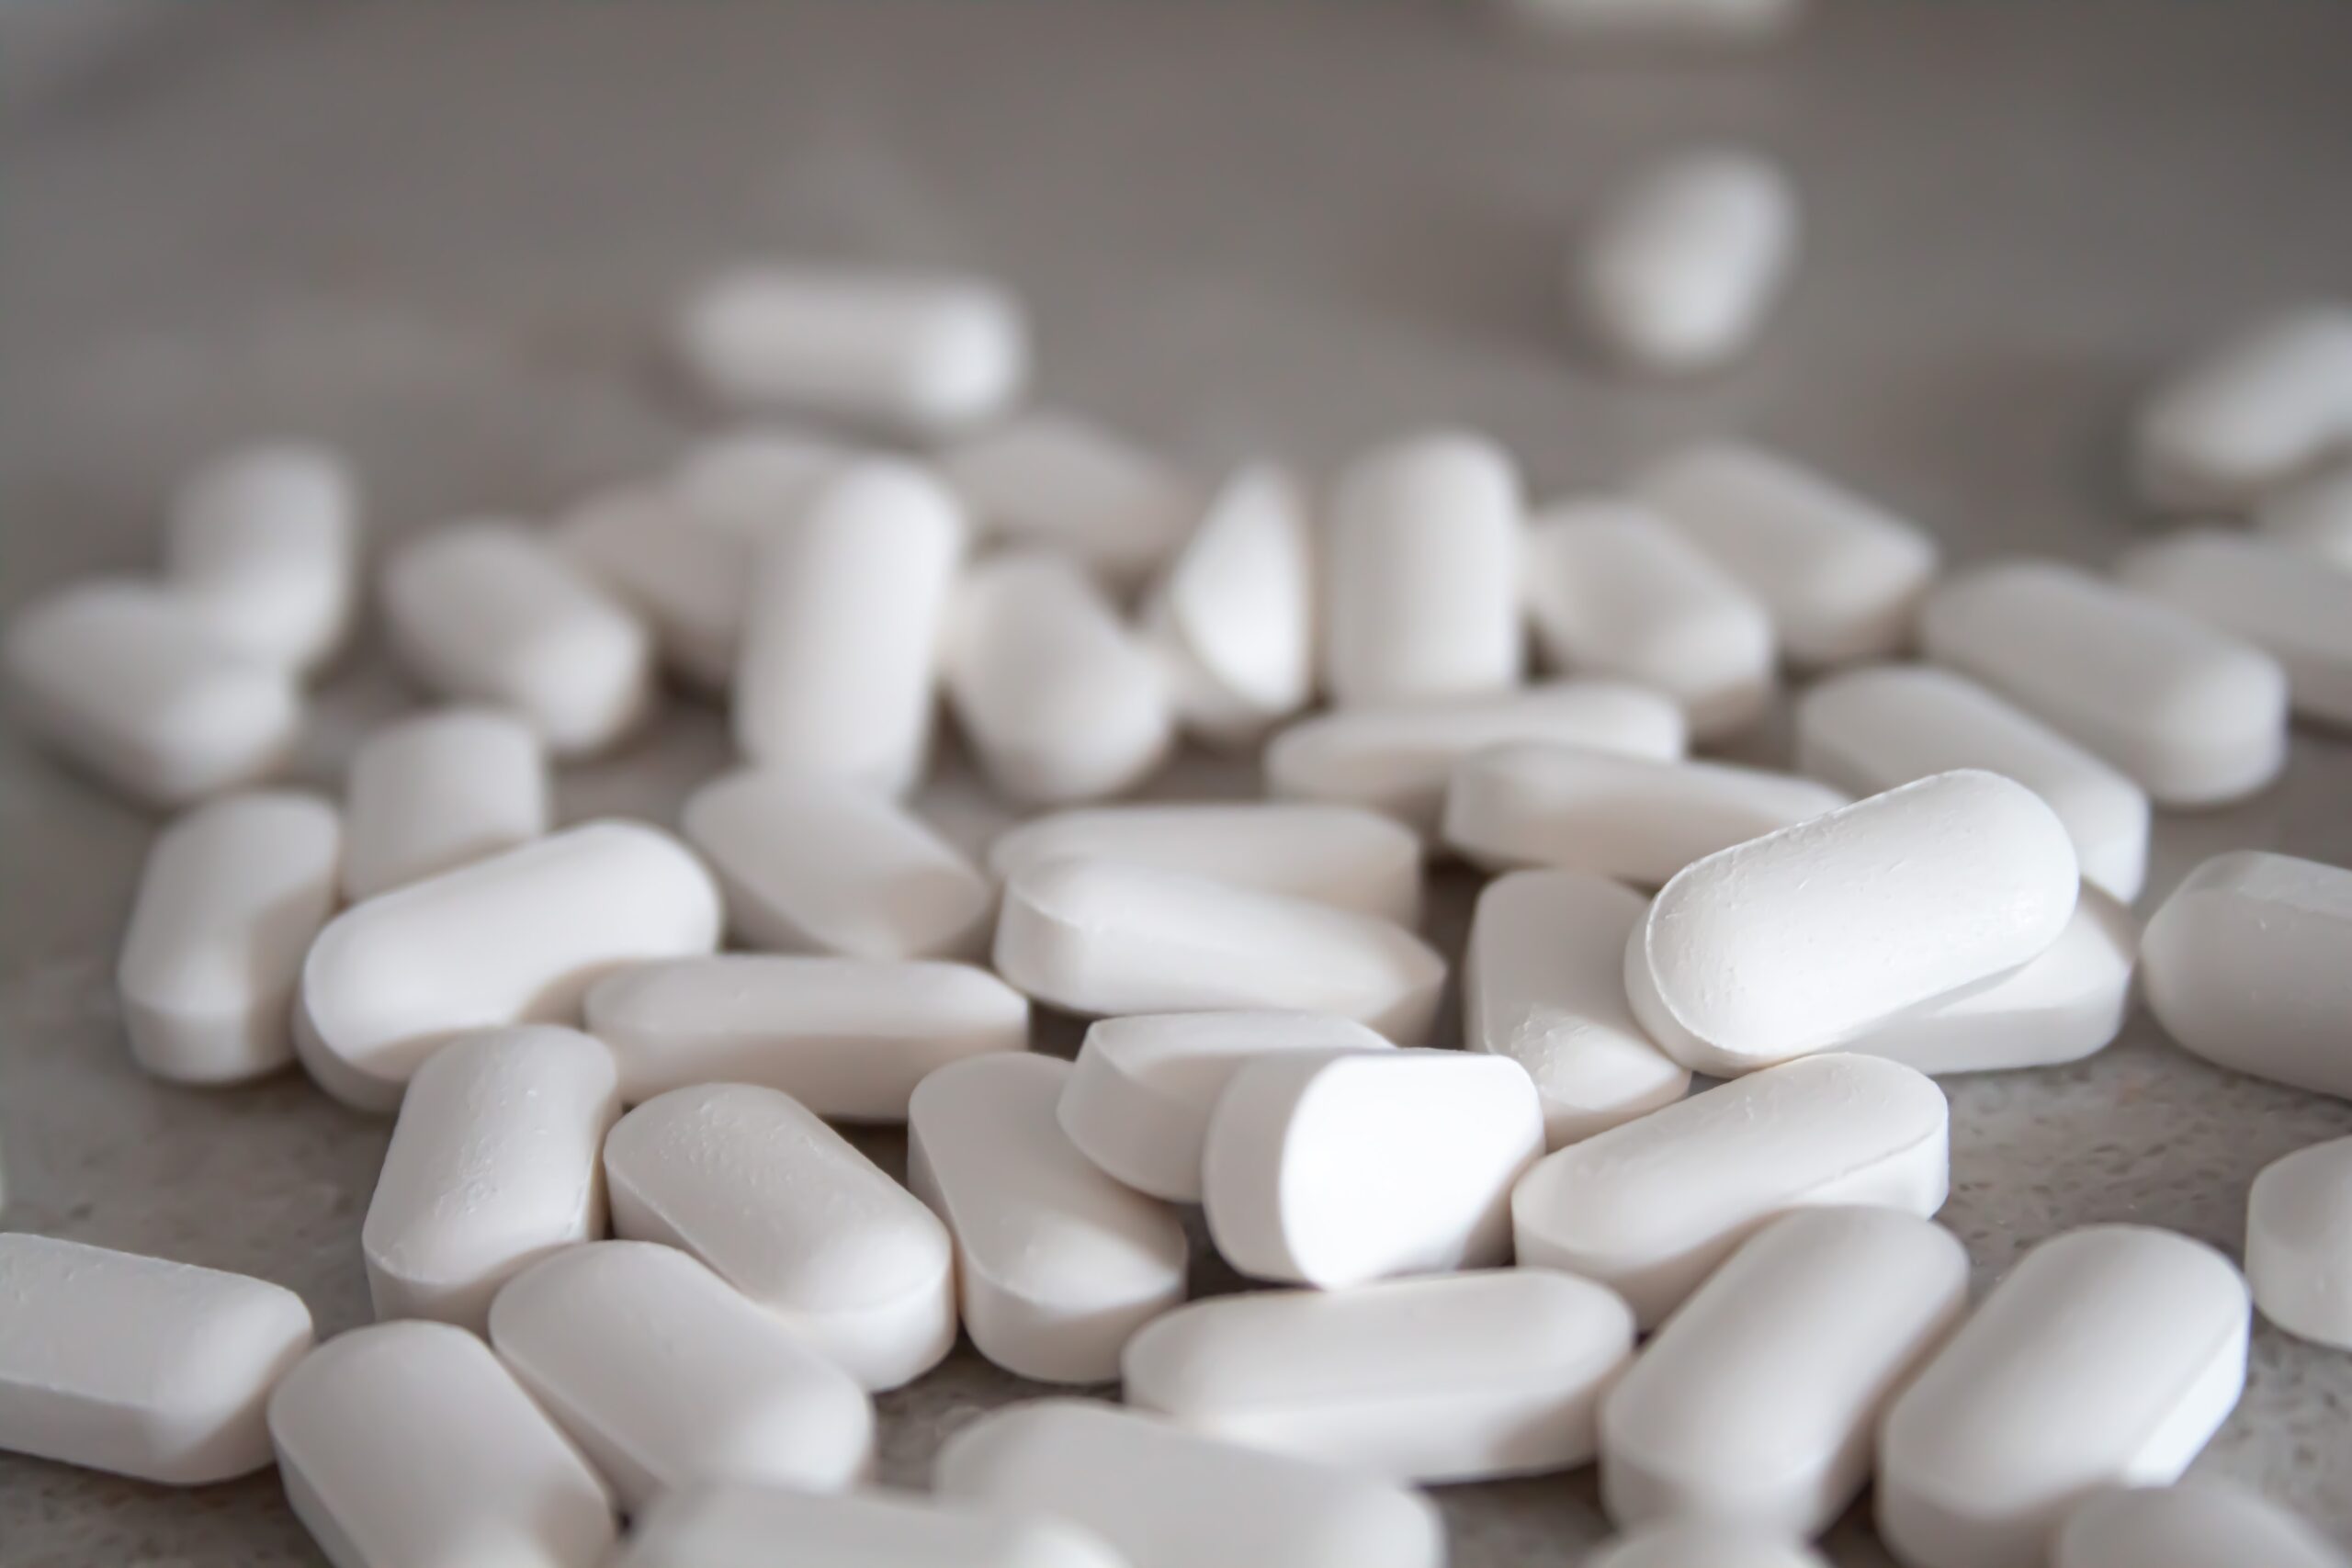 paracetamol and acetaminophen tablets